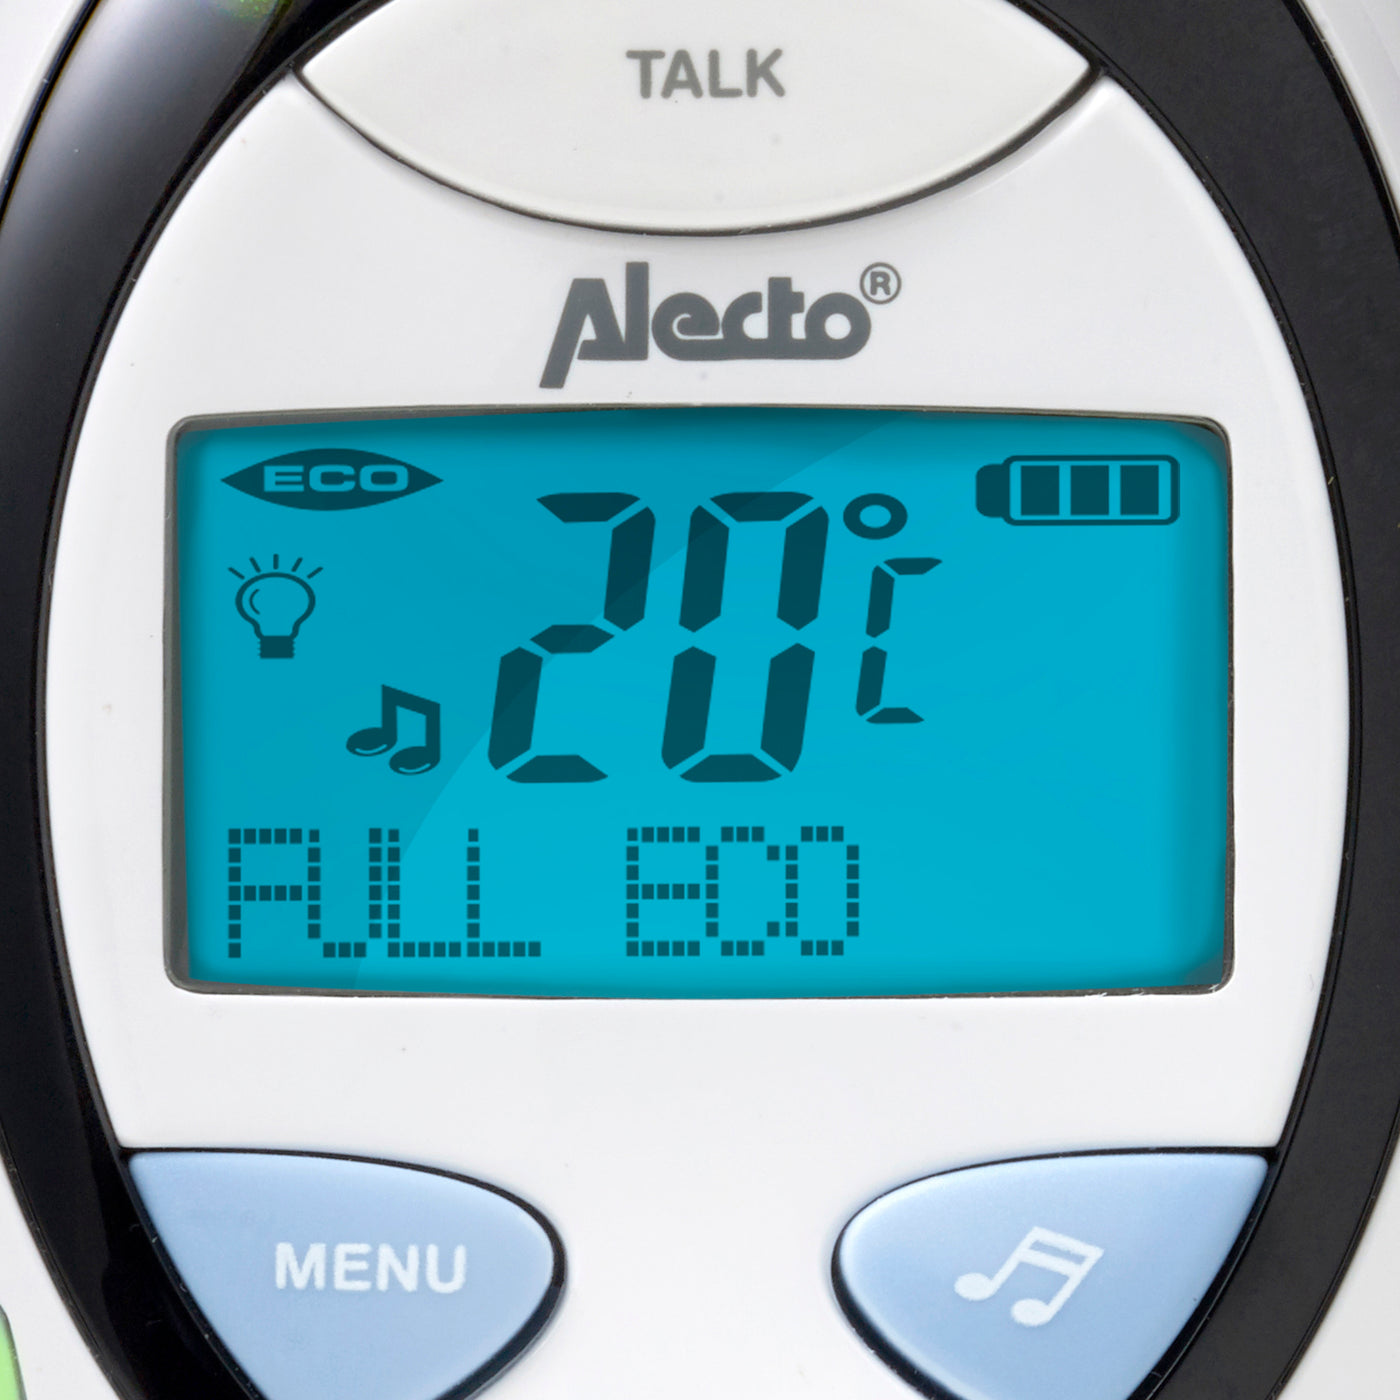 Alecto DBX-88 ECO - DECT Babyphone mit Full ECO-Modus und Display, weiß/blau